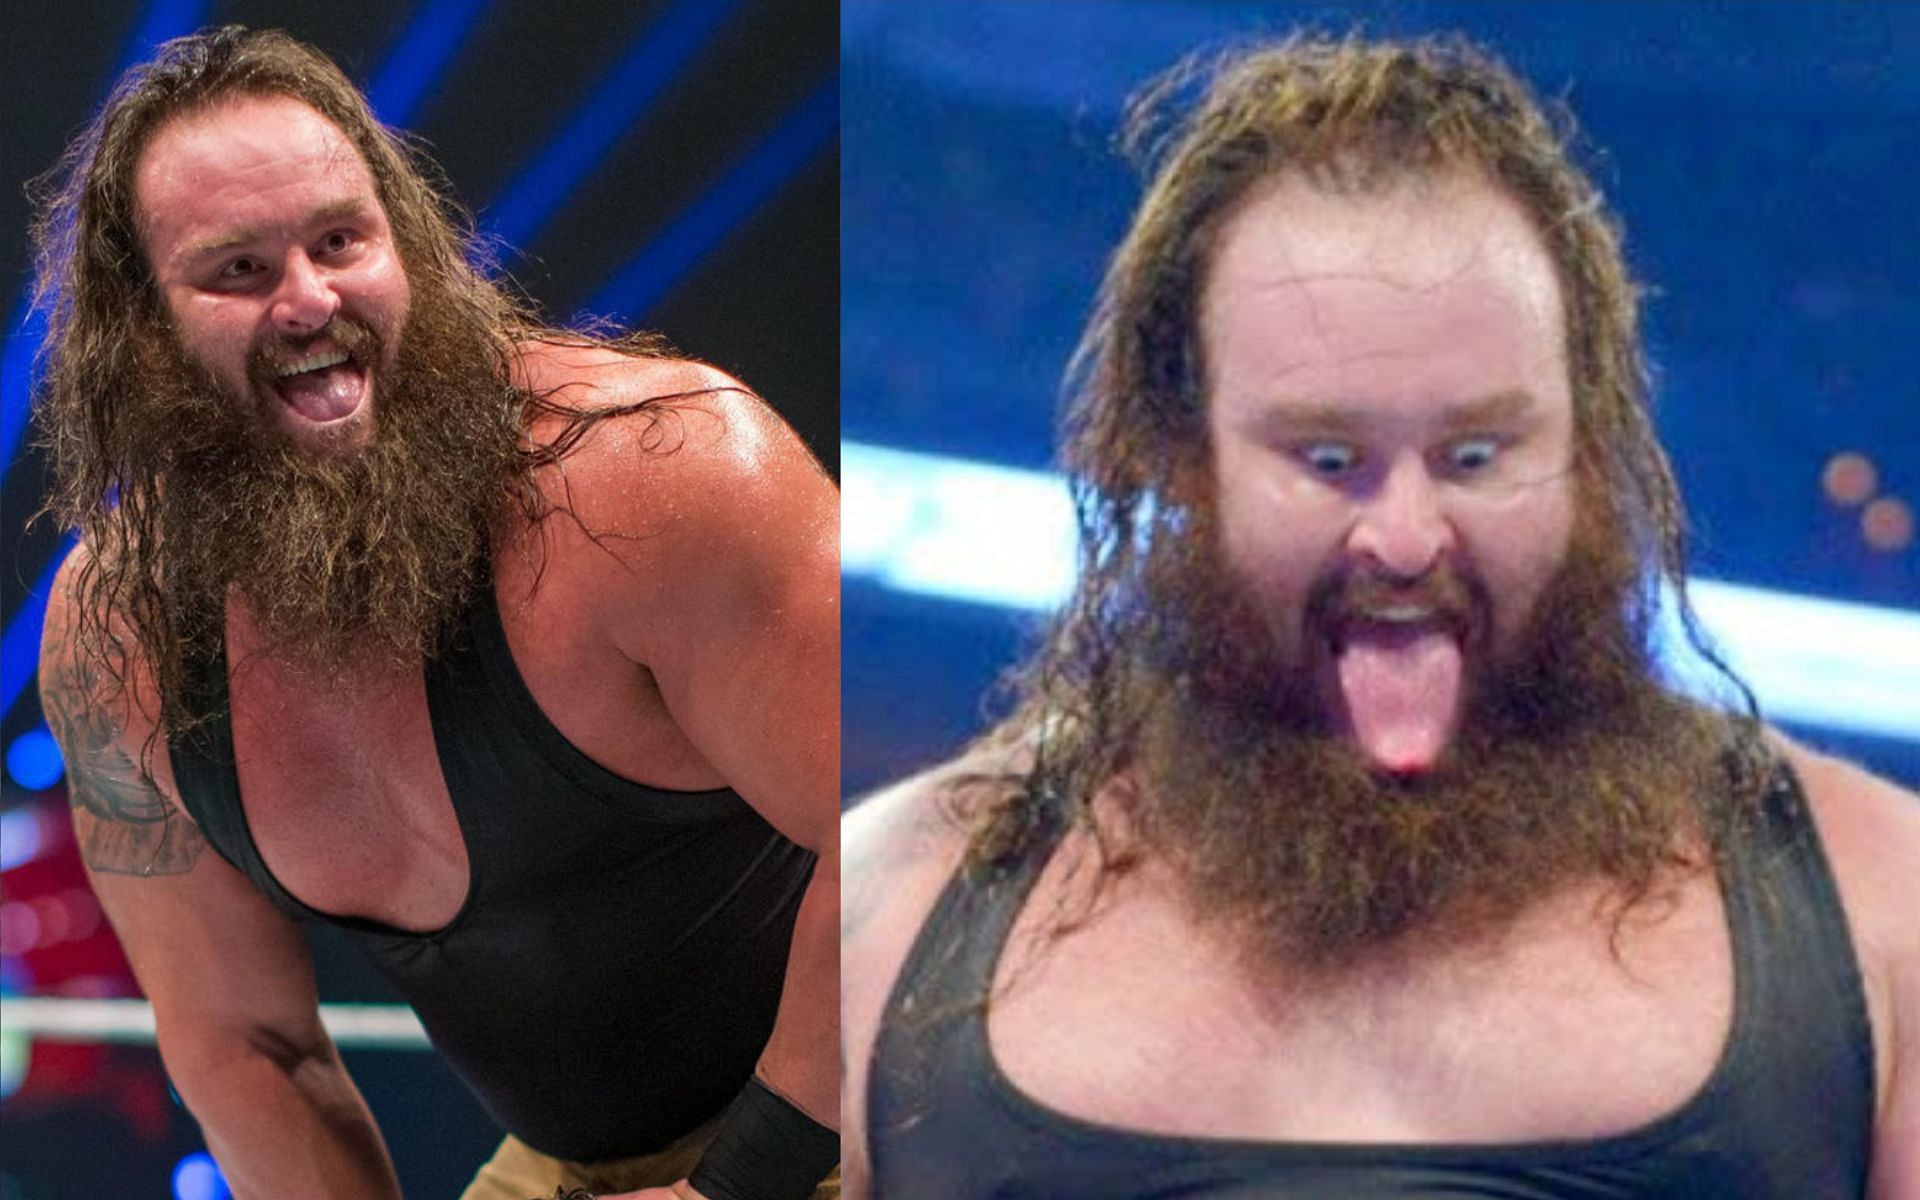 Braun Strowman had an immense match at WWE Crown Jewel recently